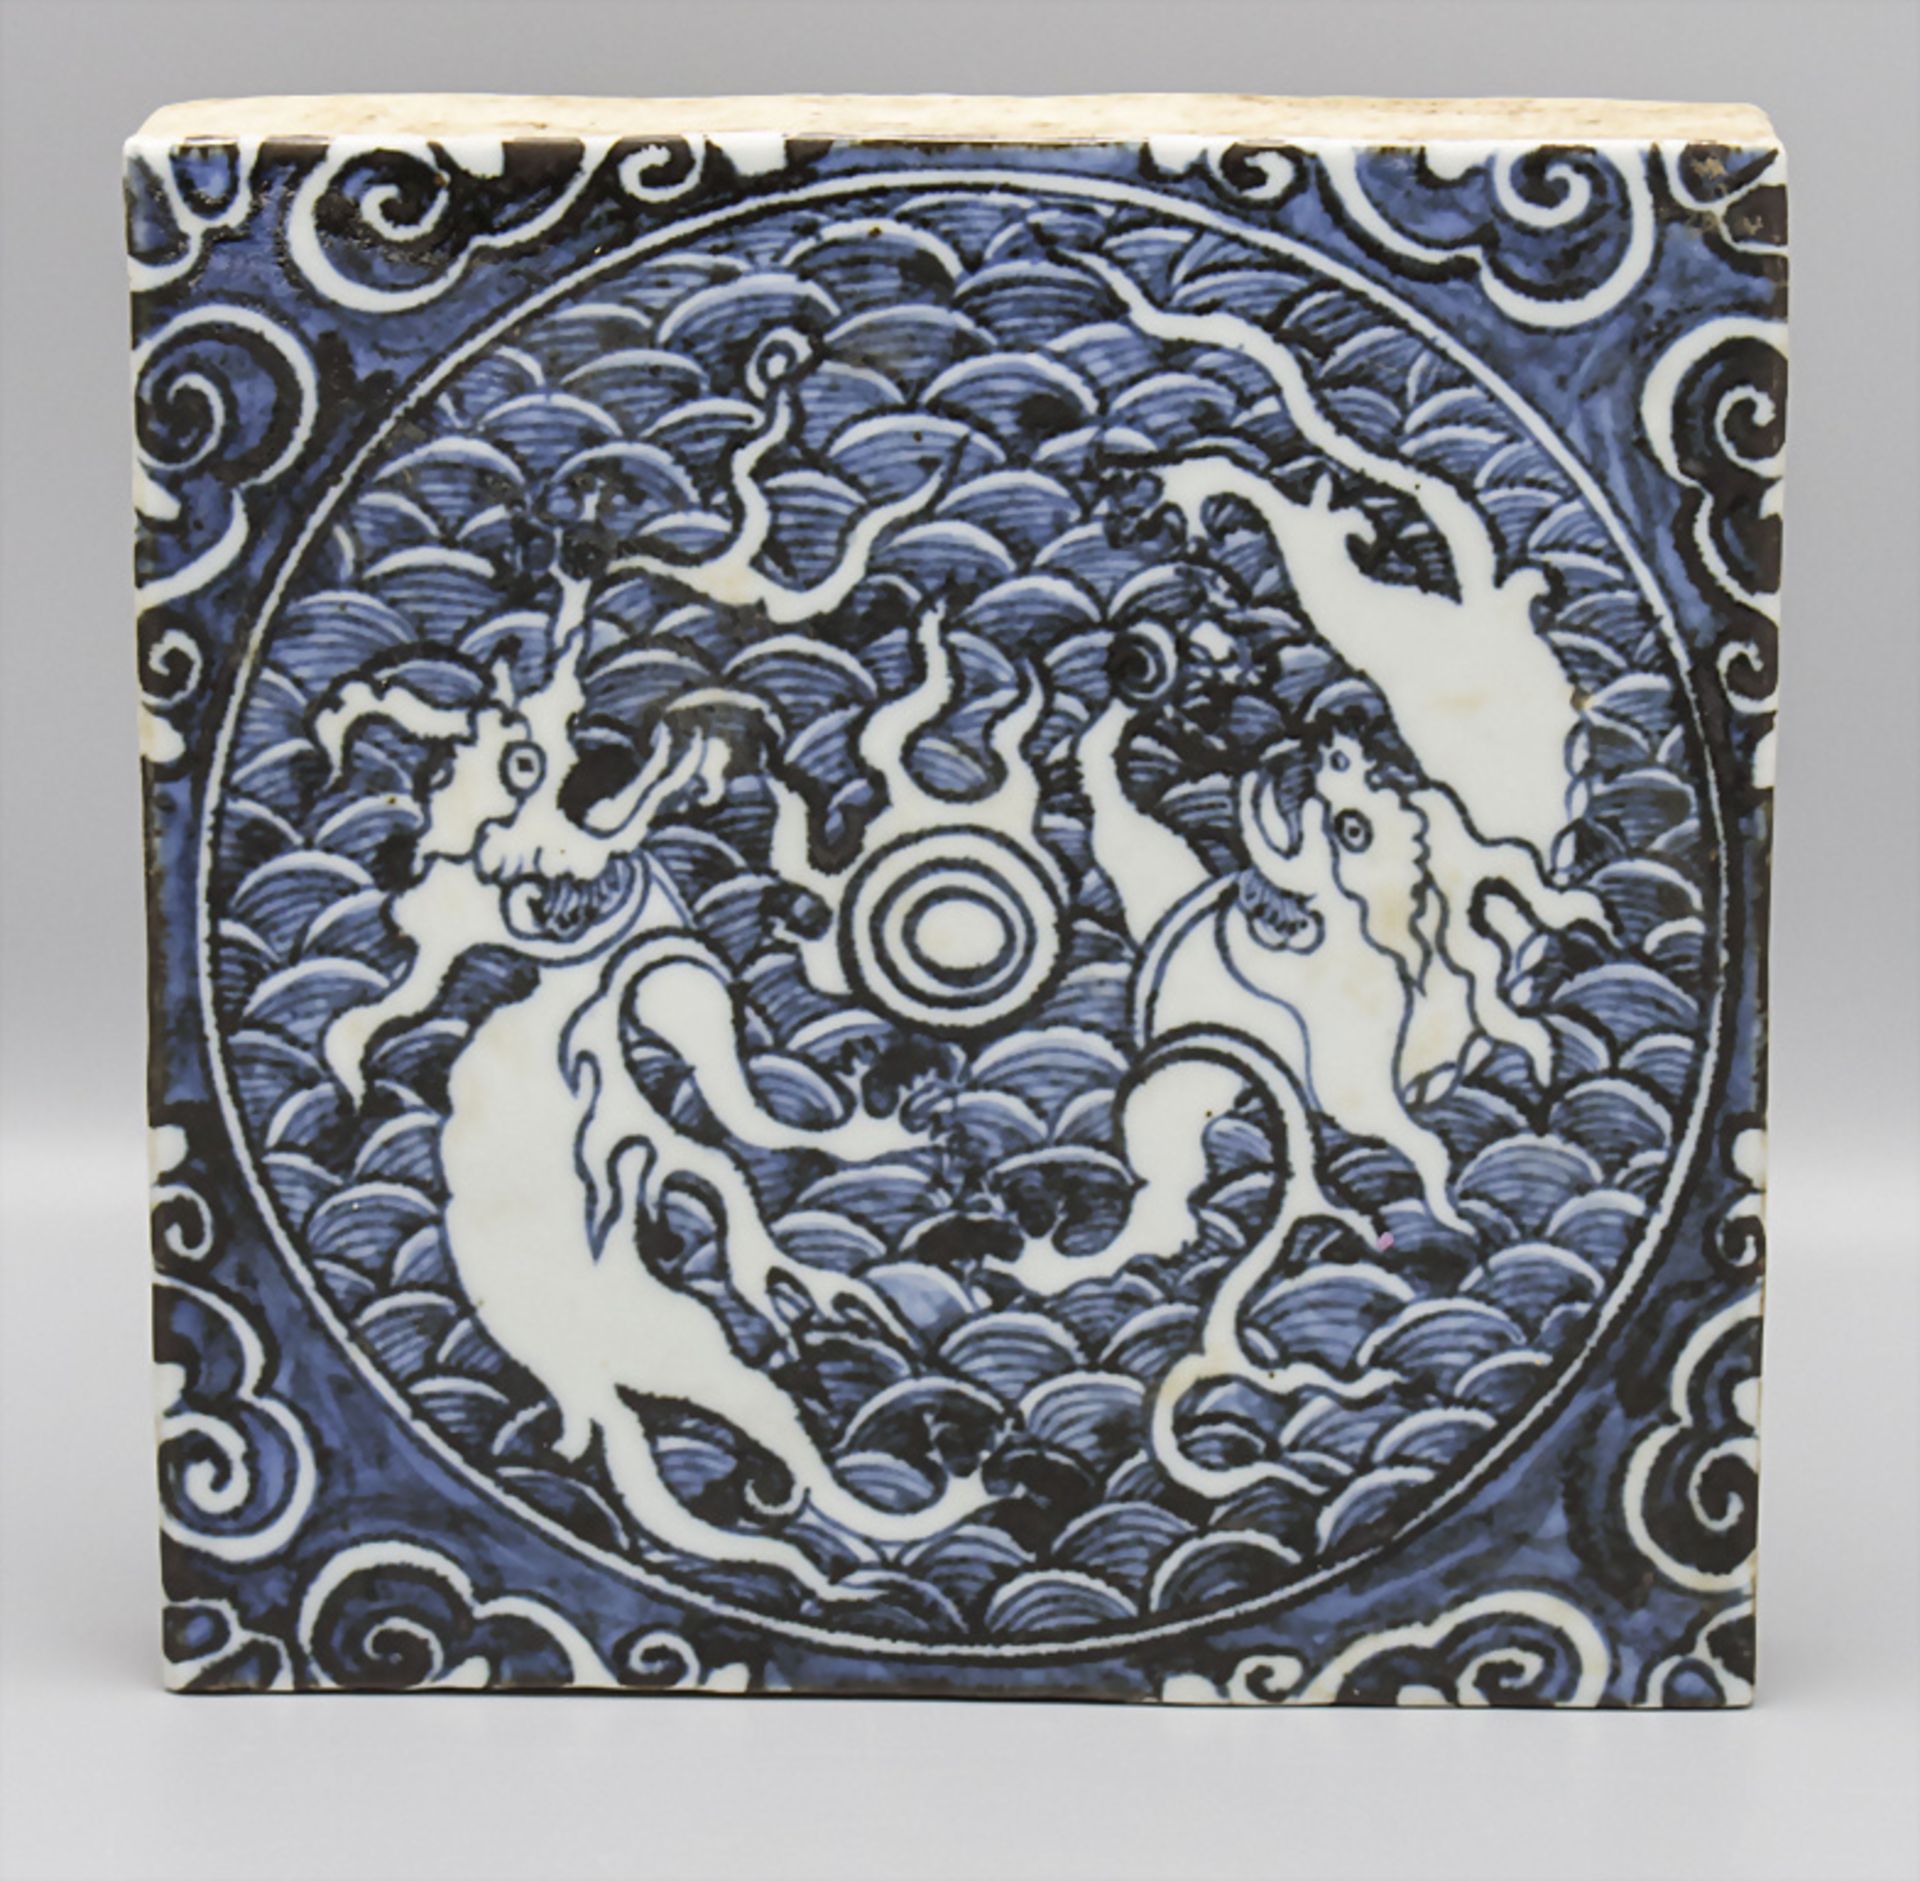 Kachel mit mystischen Wesen / A tile with mystical creatures, wohl China, 18. Jh.